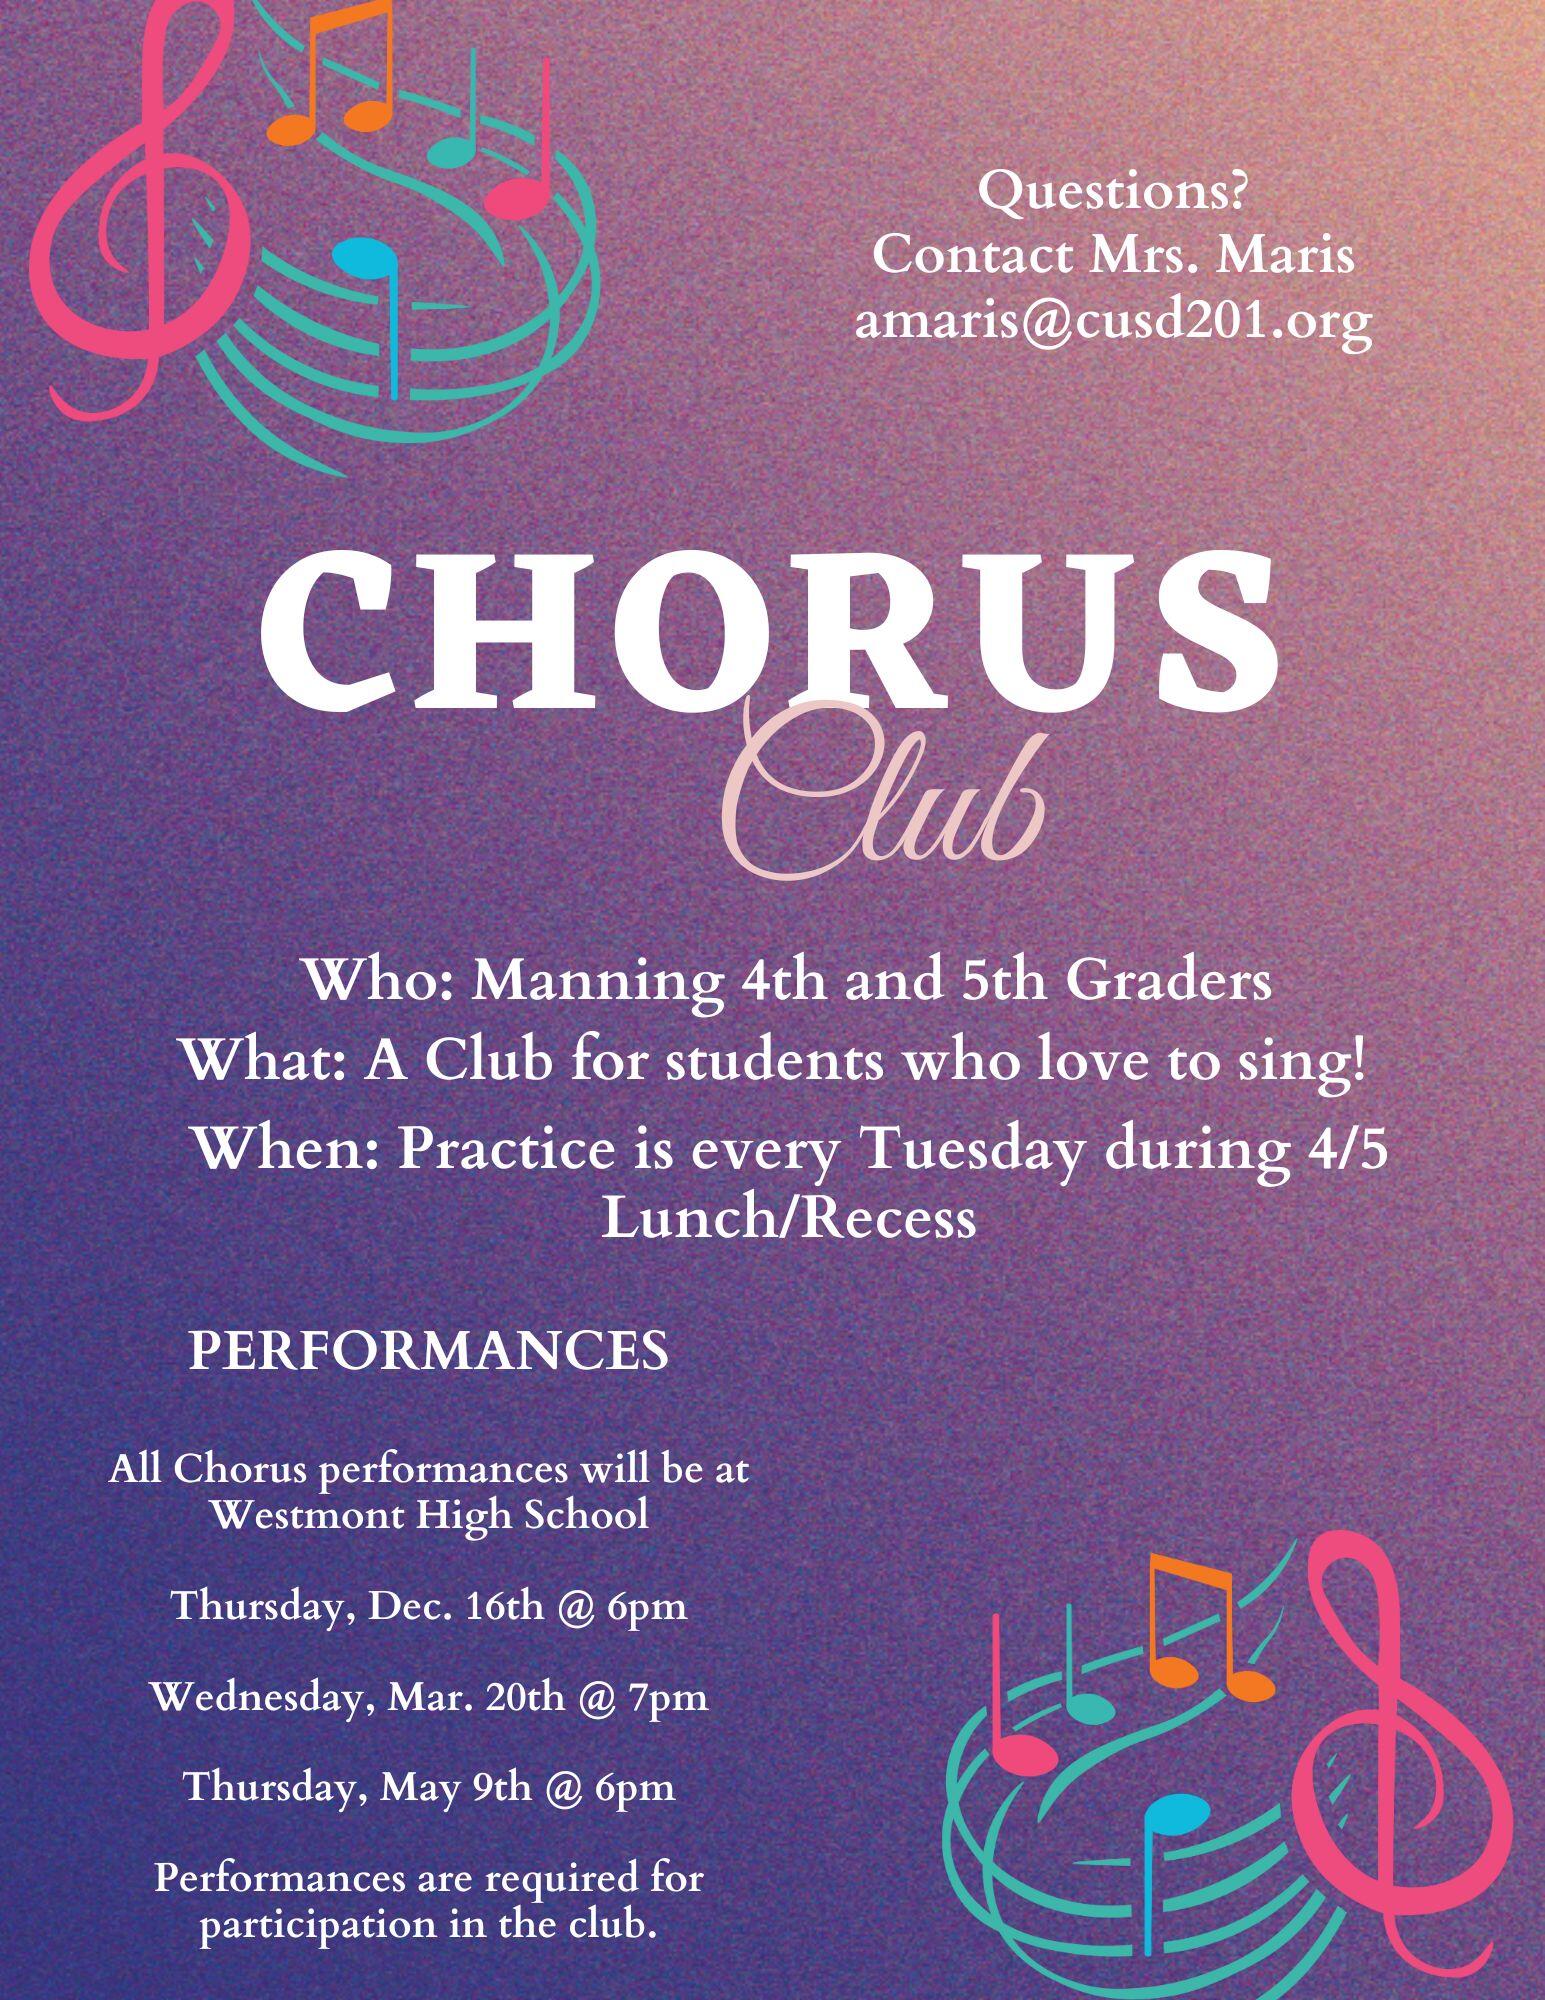 Chorus Club Information